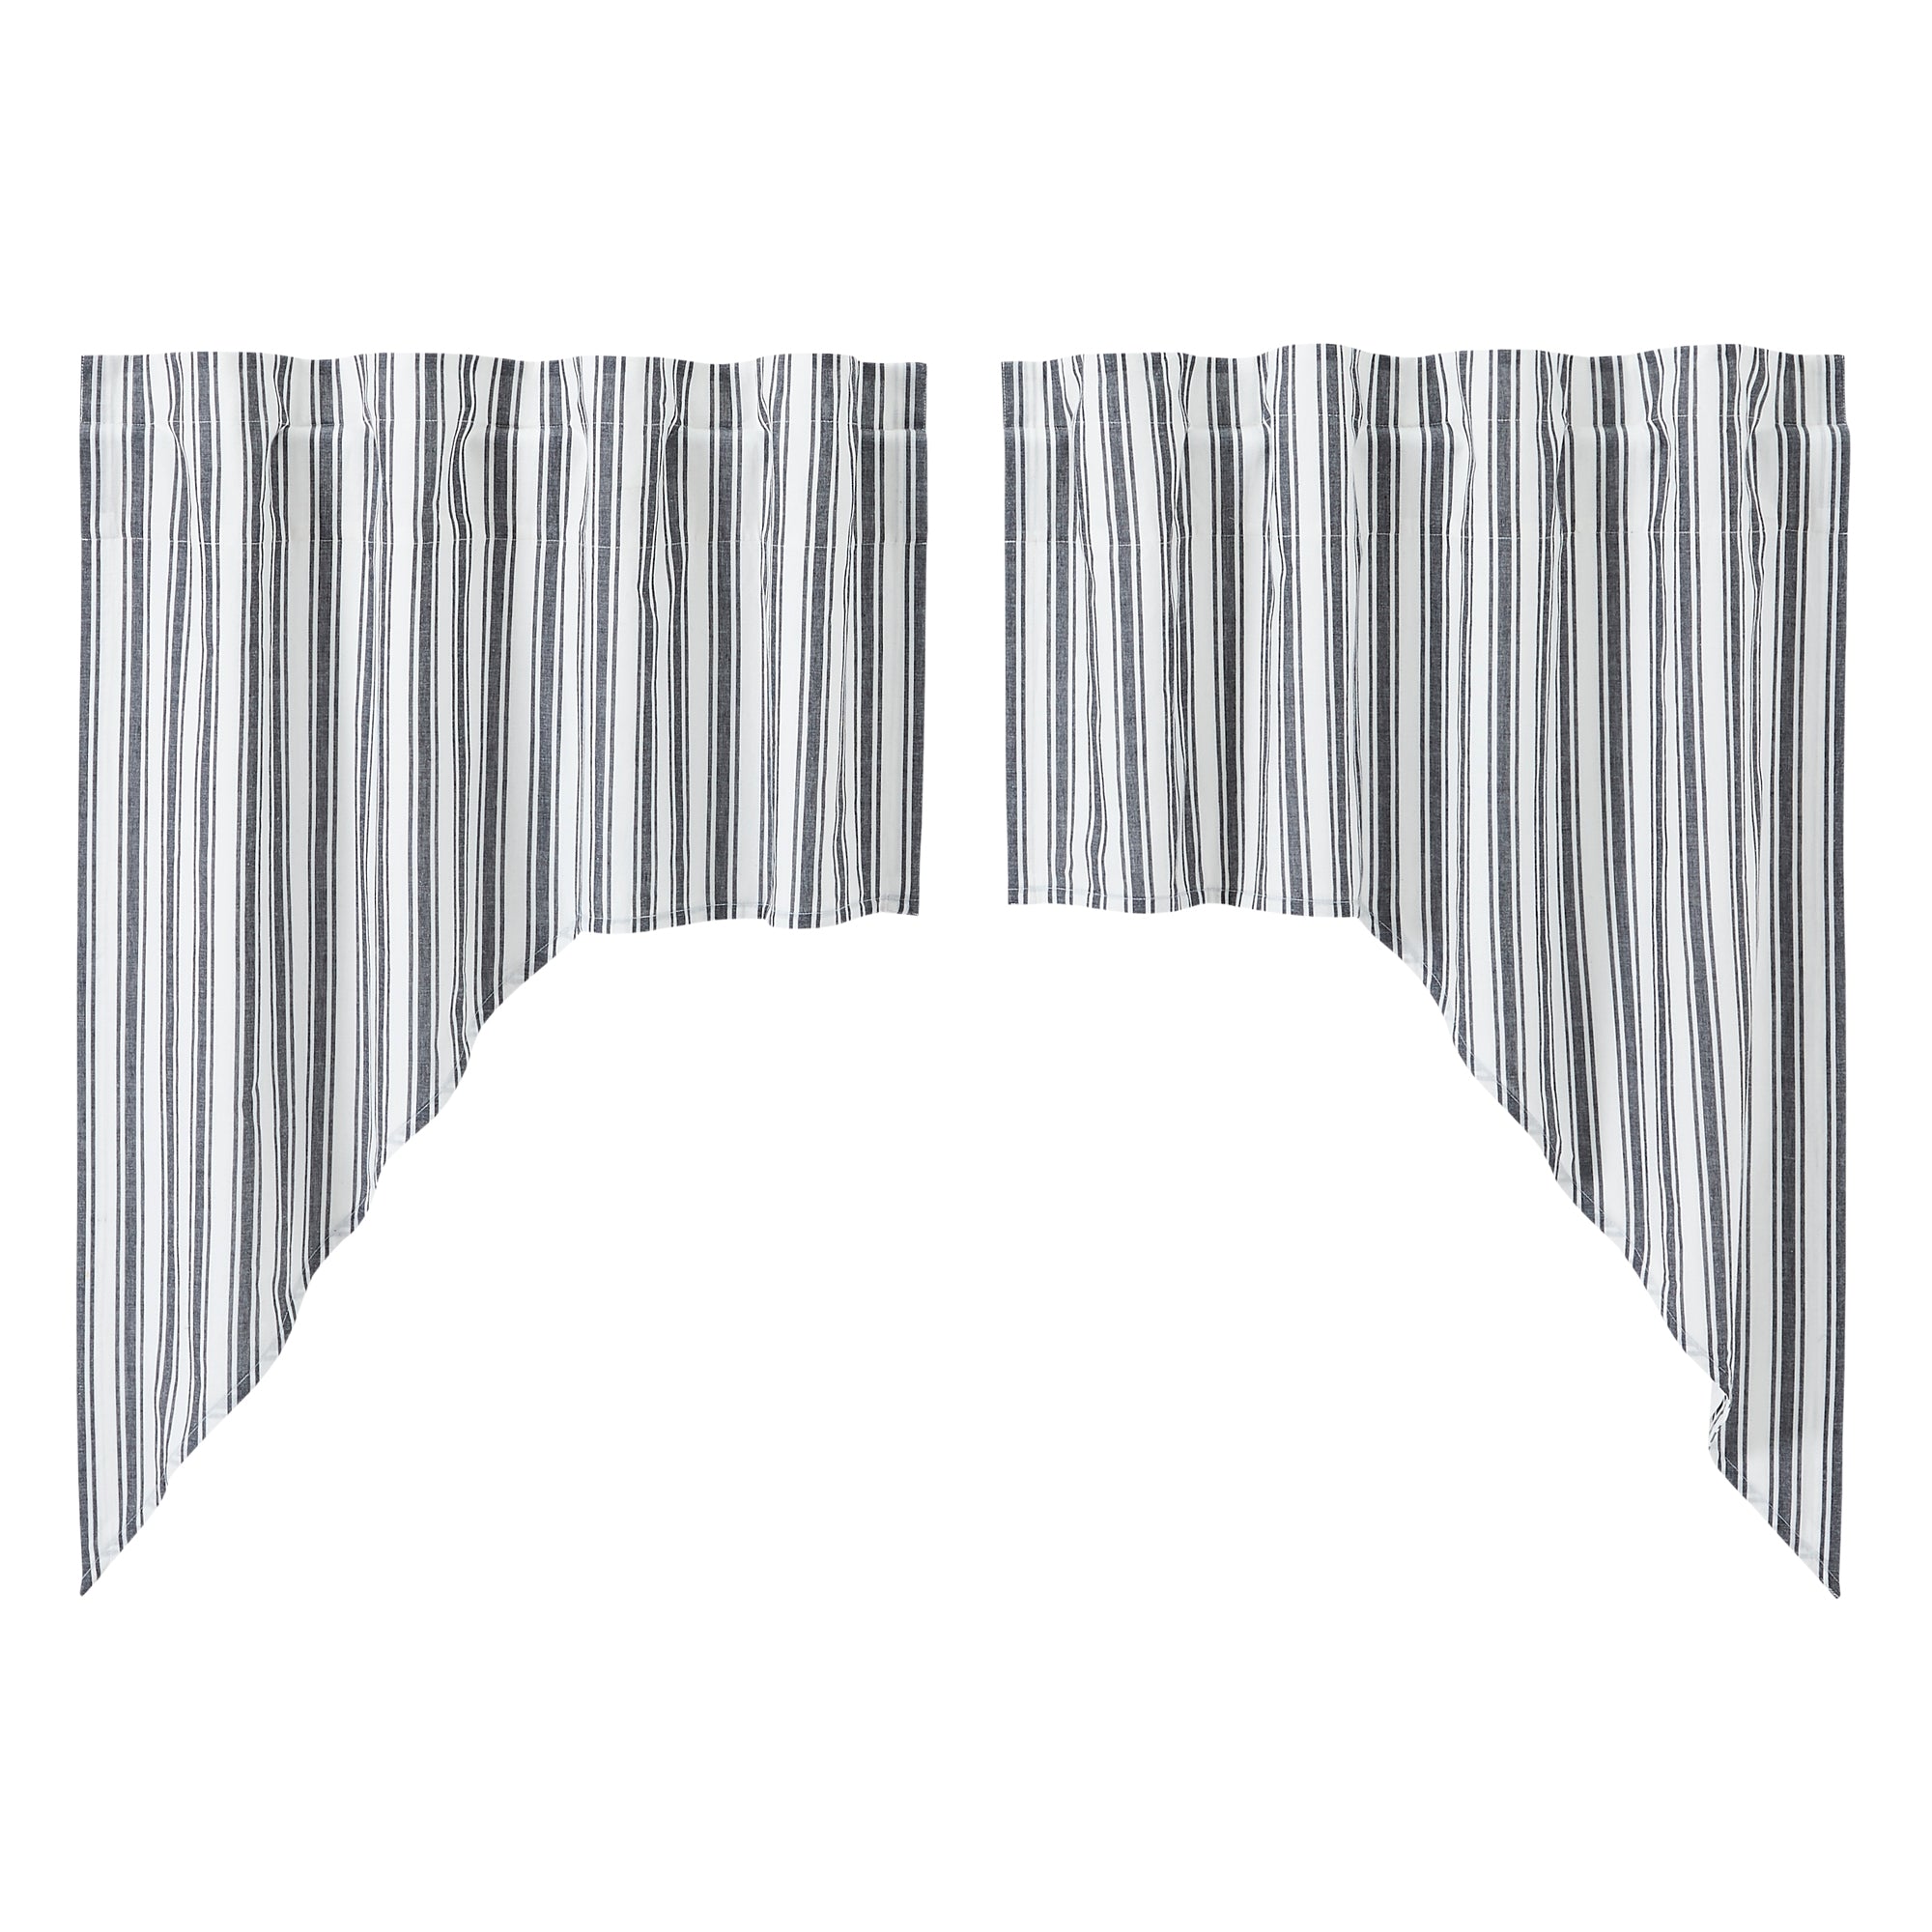 April & Olive Sawyer Mill Black Ticking Stripe Swag Set of 2 36x36x16 By VHC Brands